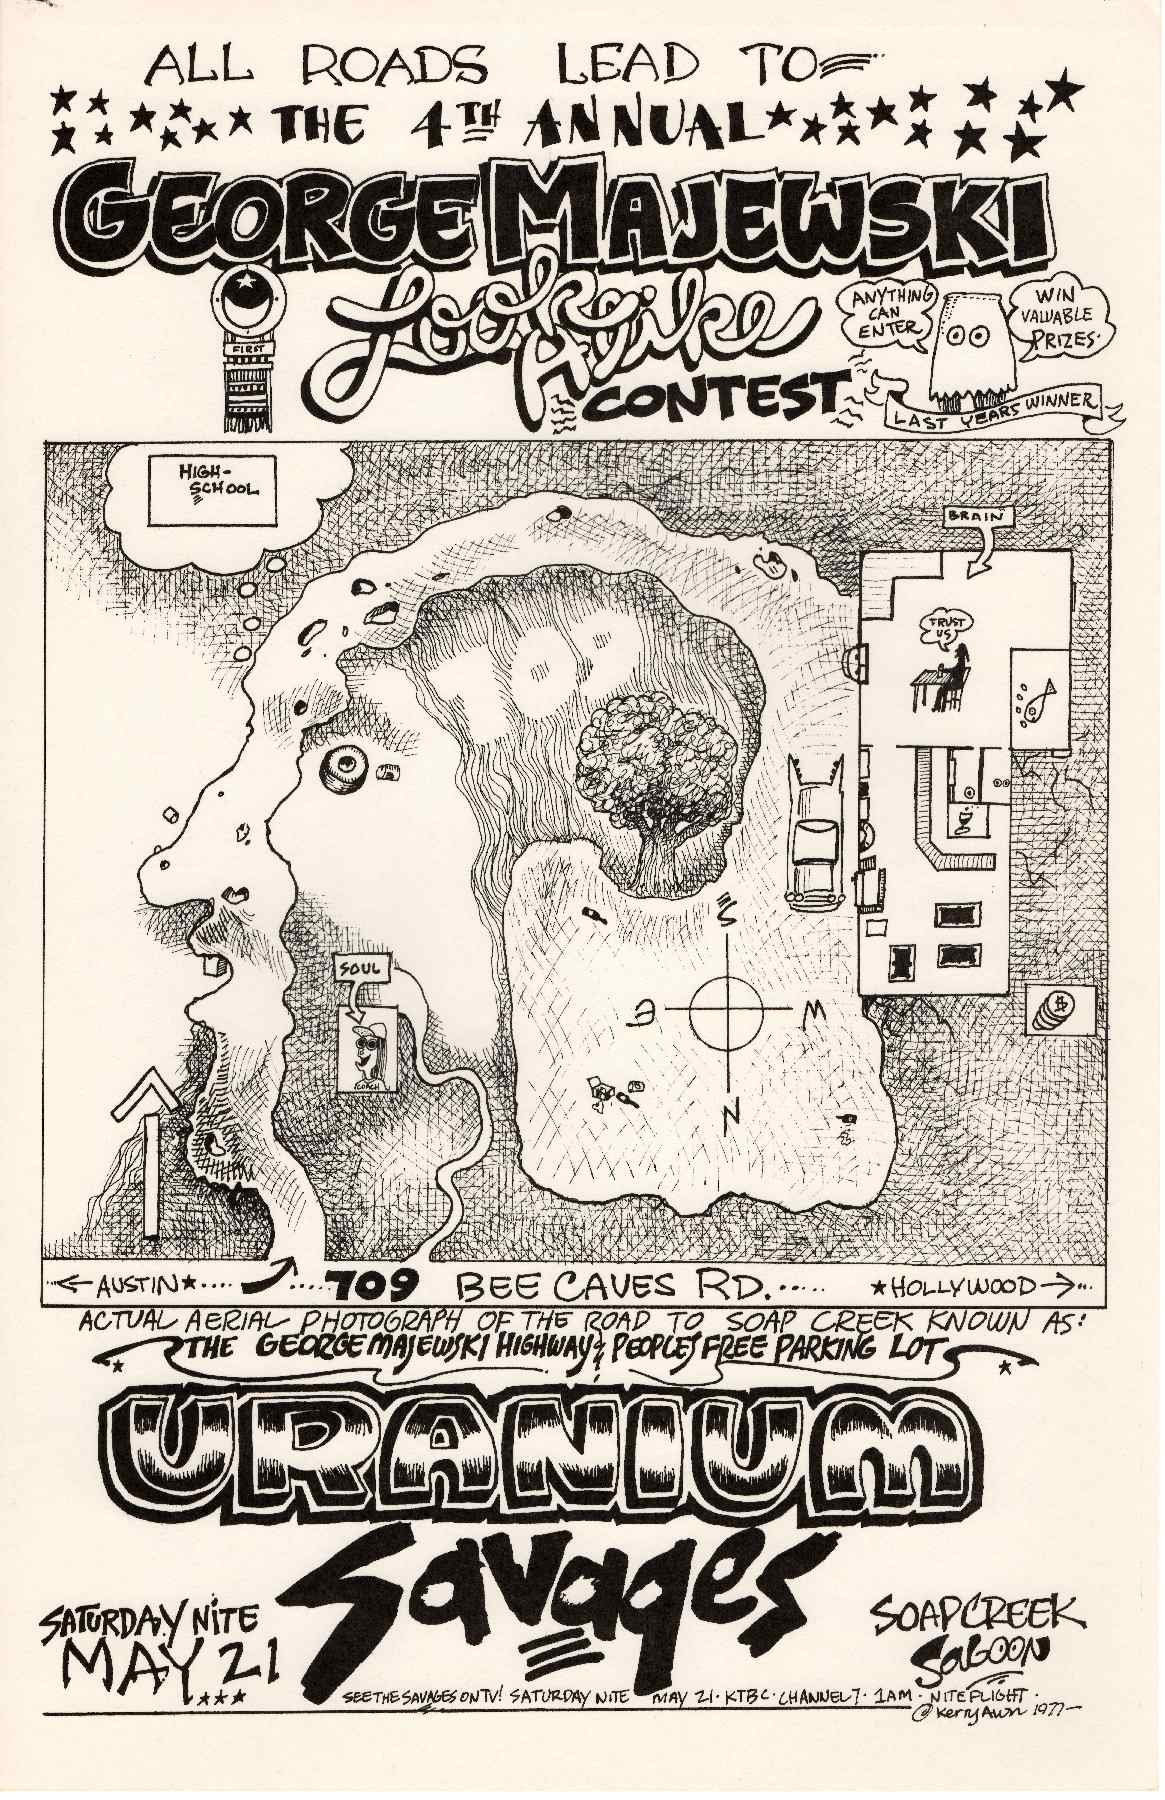 1977.05.21.George Majewski Look A Like Contest.Uranium Savages.Soap Creek Saloon.Awn.JPG